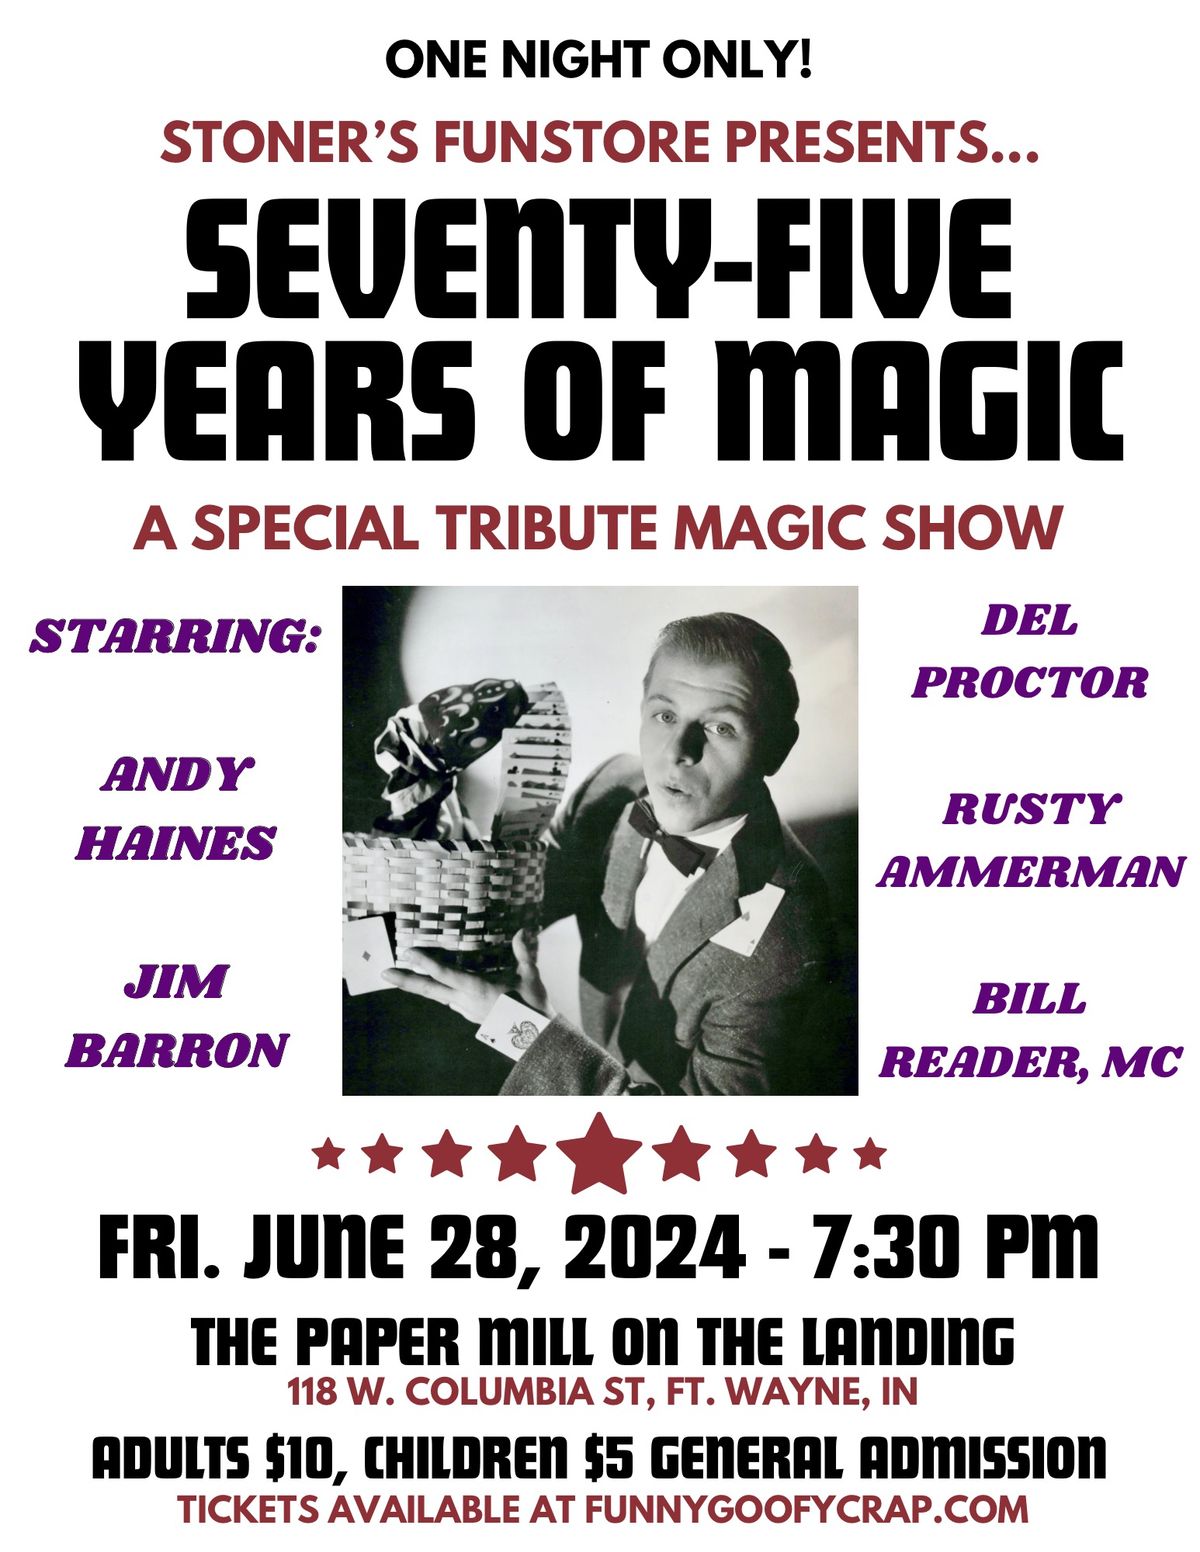 75 Years of Magic - A Tribute Magic Show